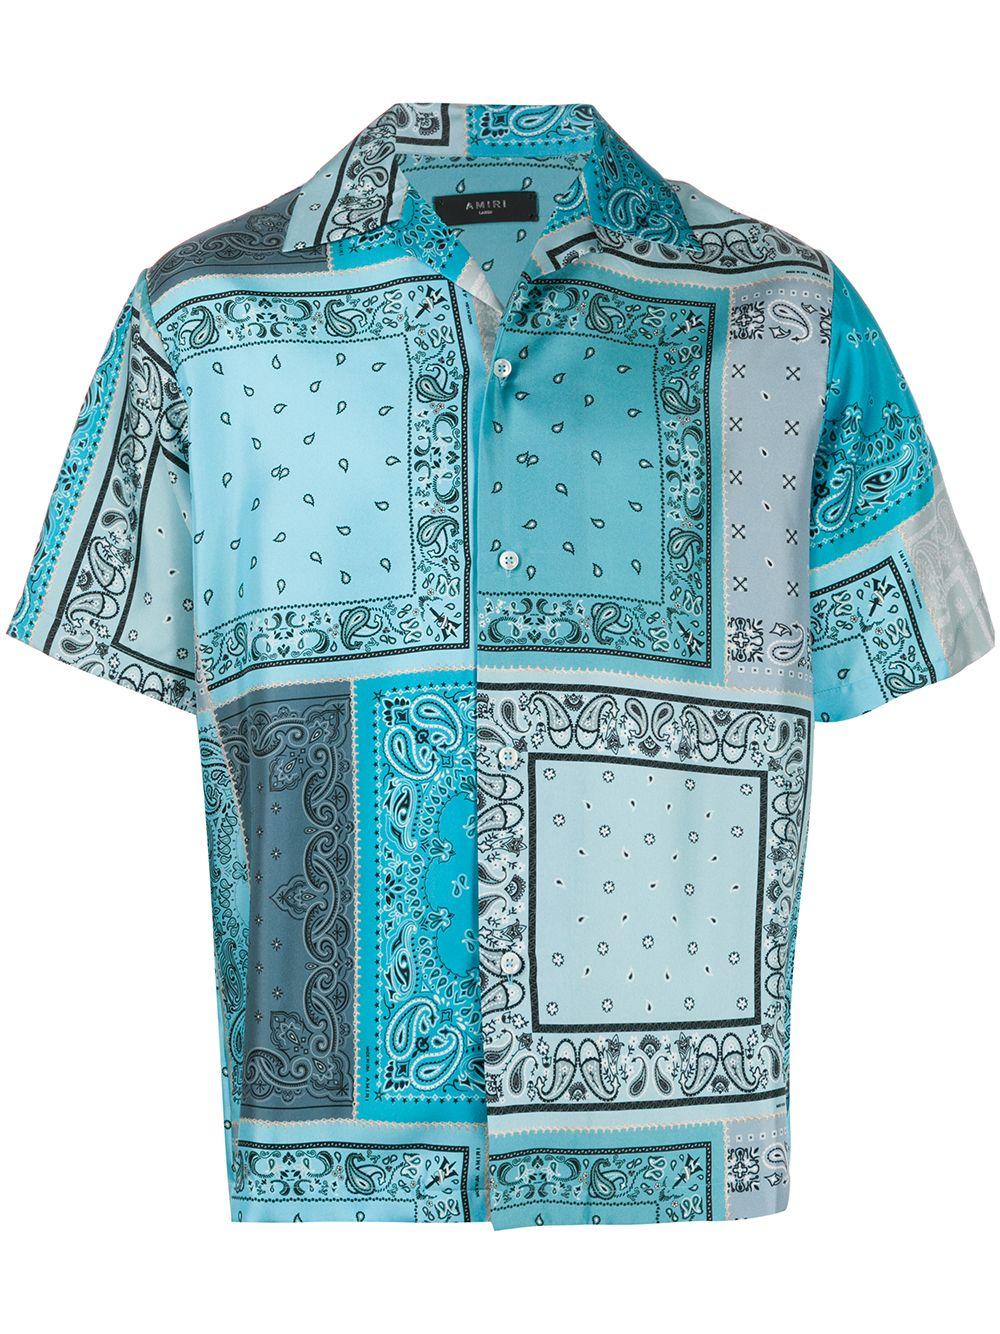 Amiri Blue Beverly Hills Print Silk Short Sleeve Hawaiian Shirt S